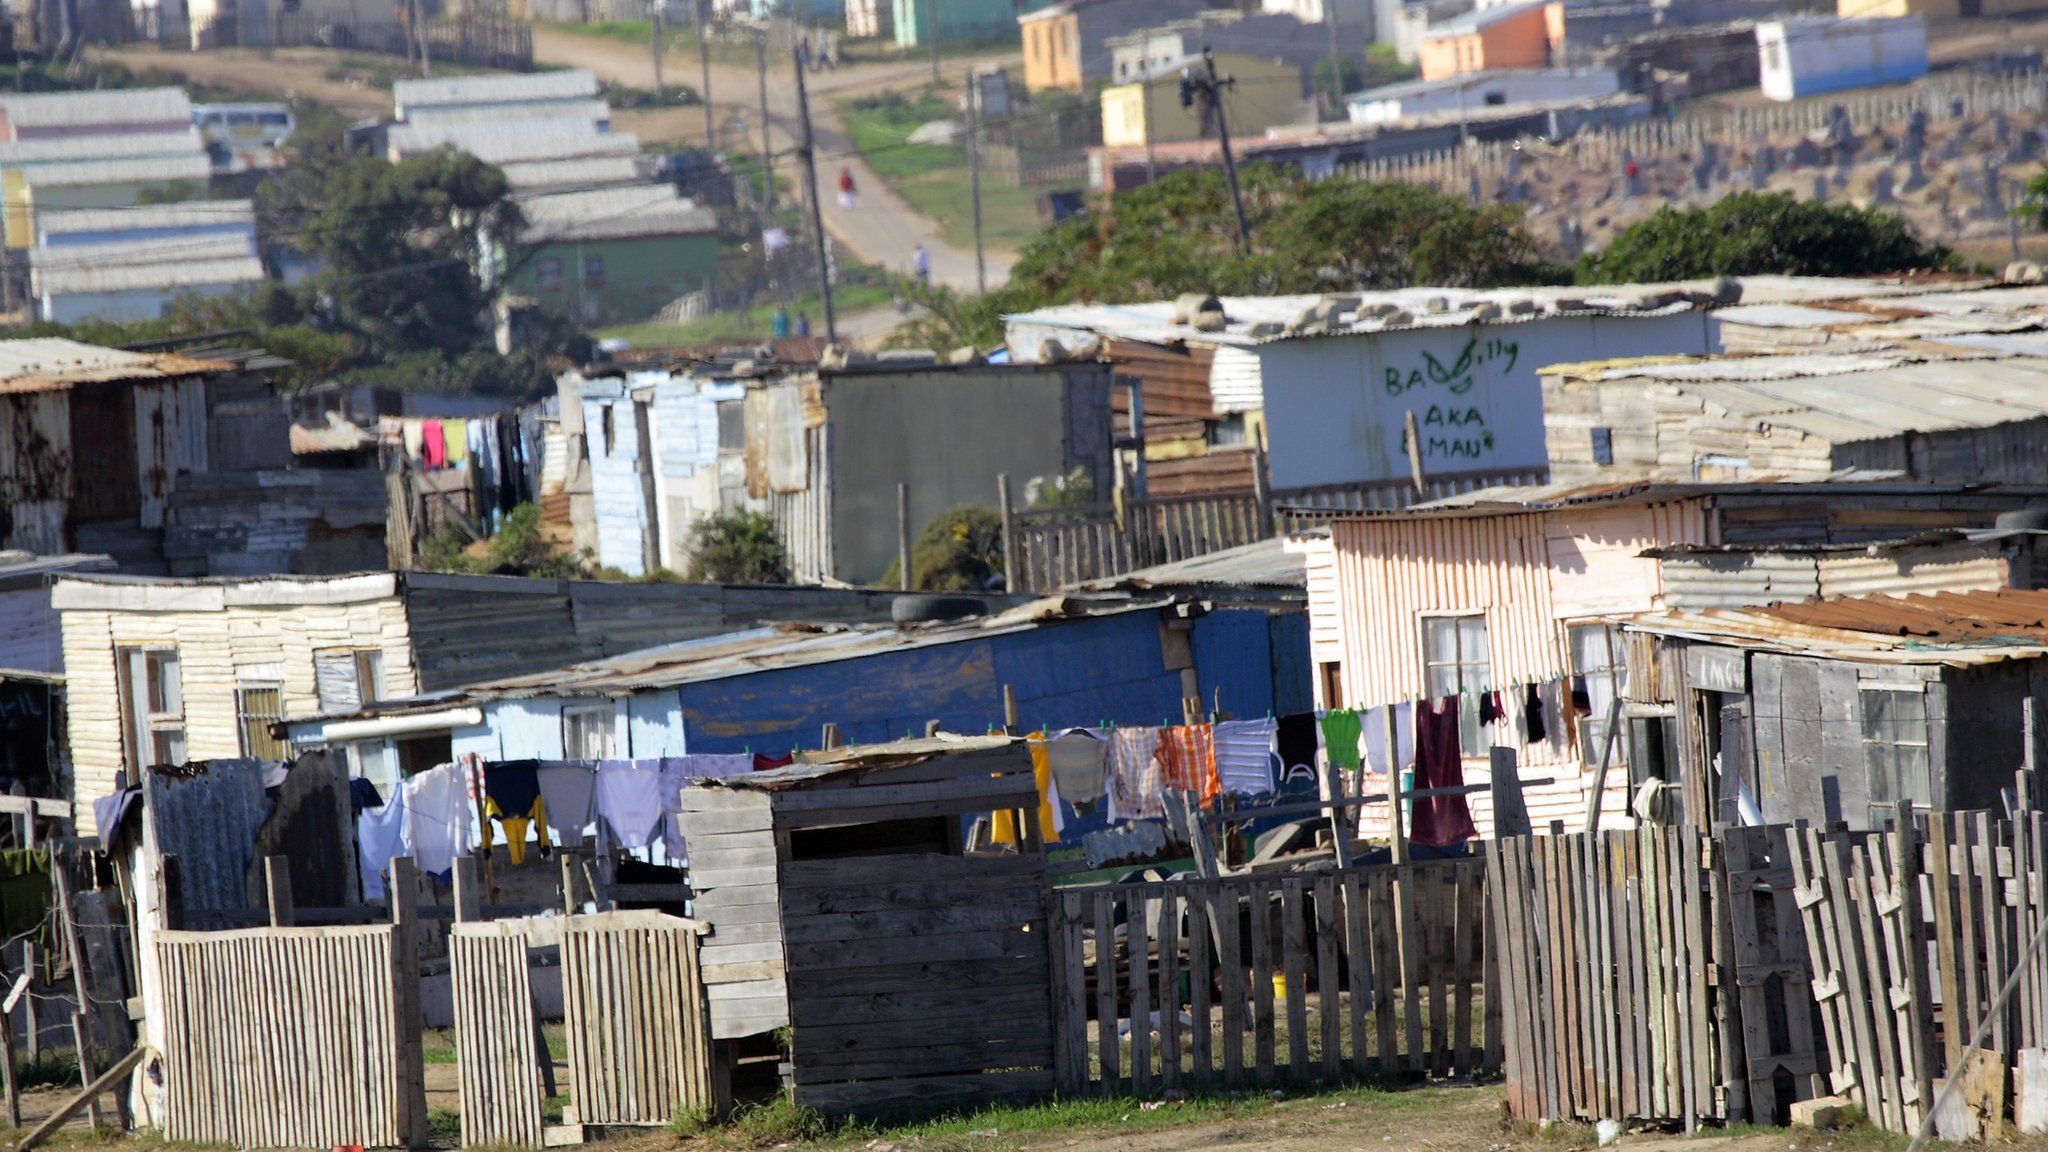 Informal housing in South Africa